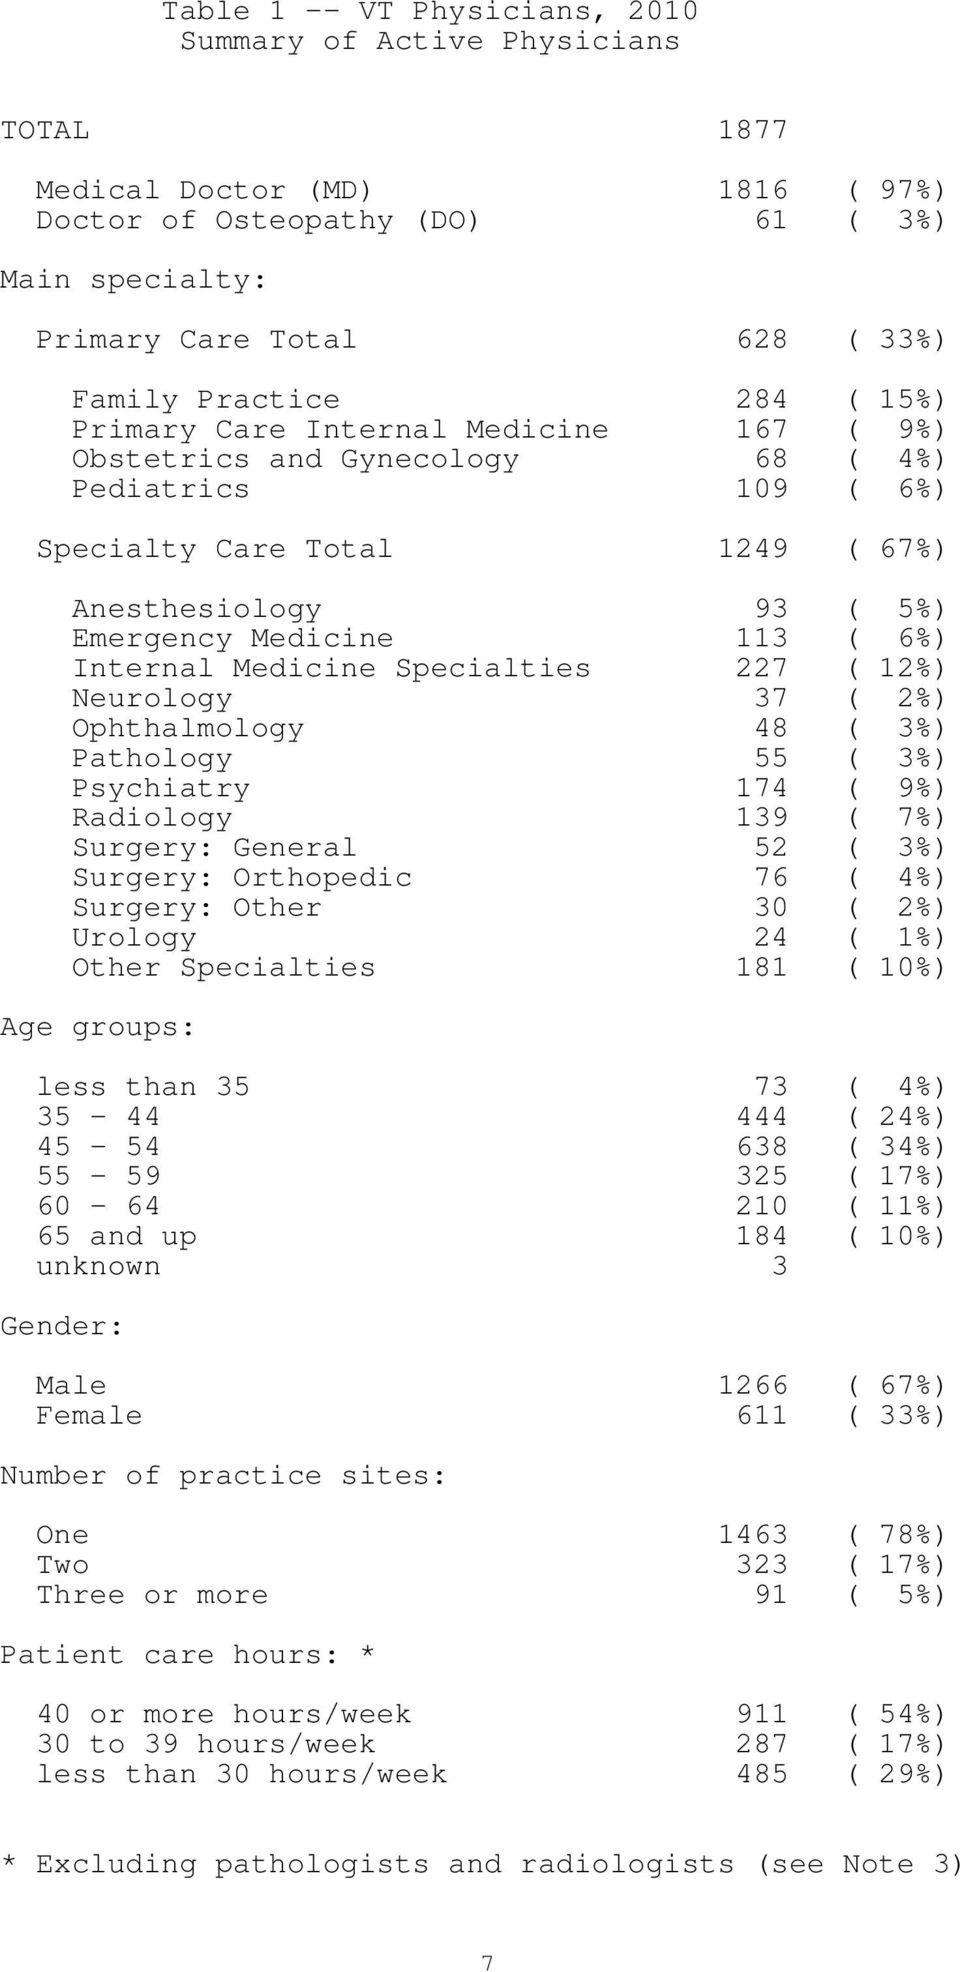 Internal Medicine Specialties 227 ( 12%) Neurology 37 ( 2%) Ophthalmology 48 ( 3%) Pathology 55 ( 3%) Psychiatry 174 ( 9%) Radiology 139 ( 7%) Surgery: General 52 ( 3%) Surgery: Orthopedic 76 ( 4%)